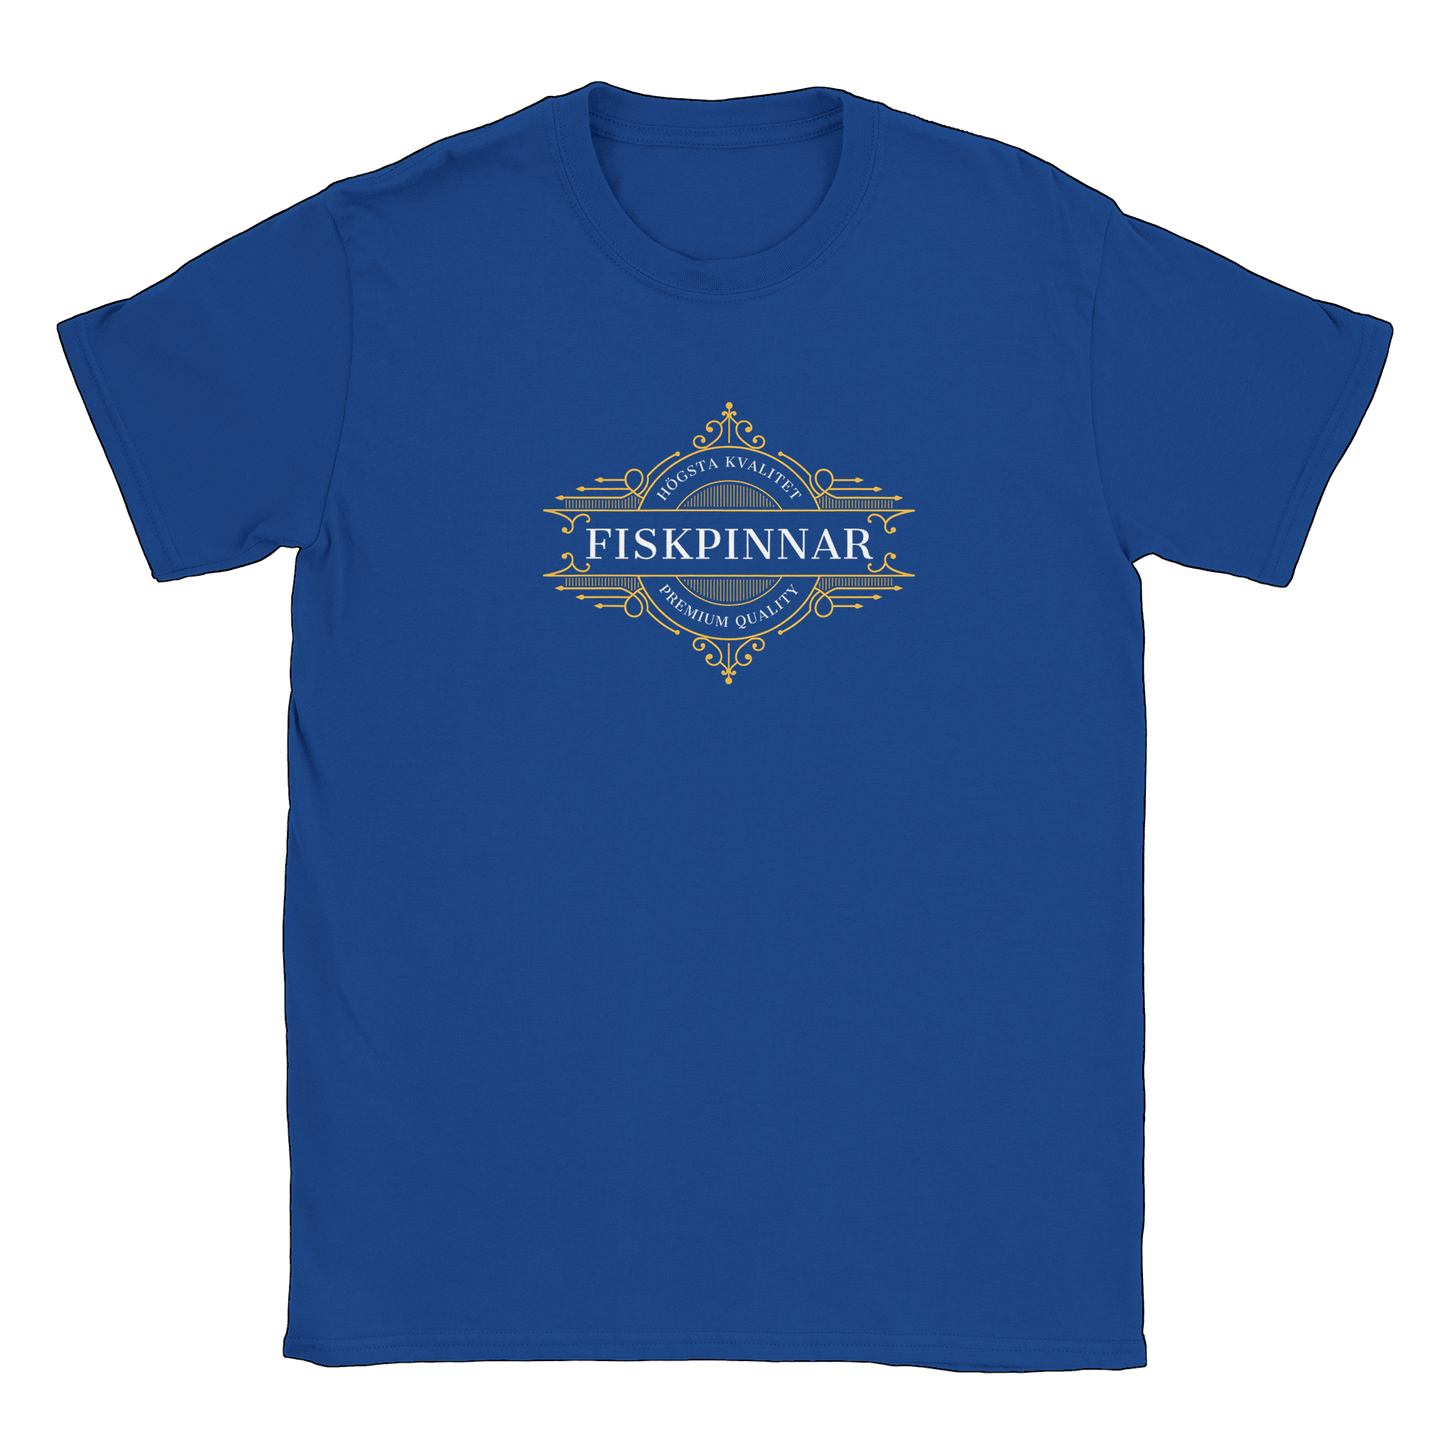 Fiskpinnar - T-shirt Royal